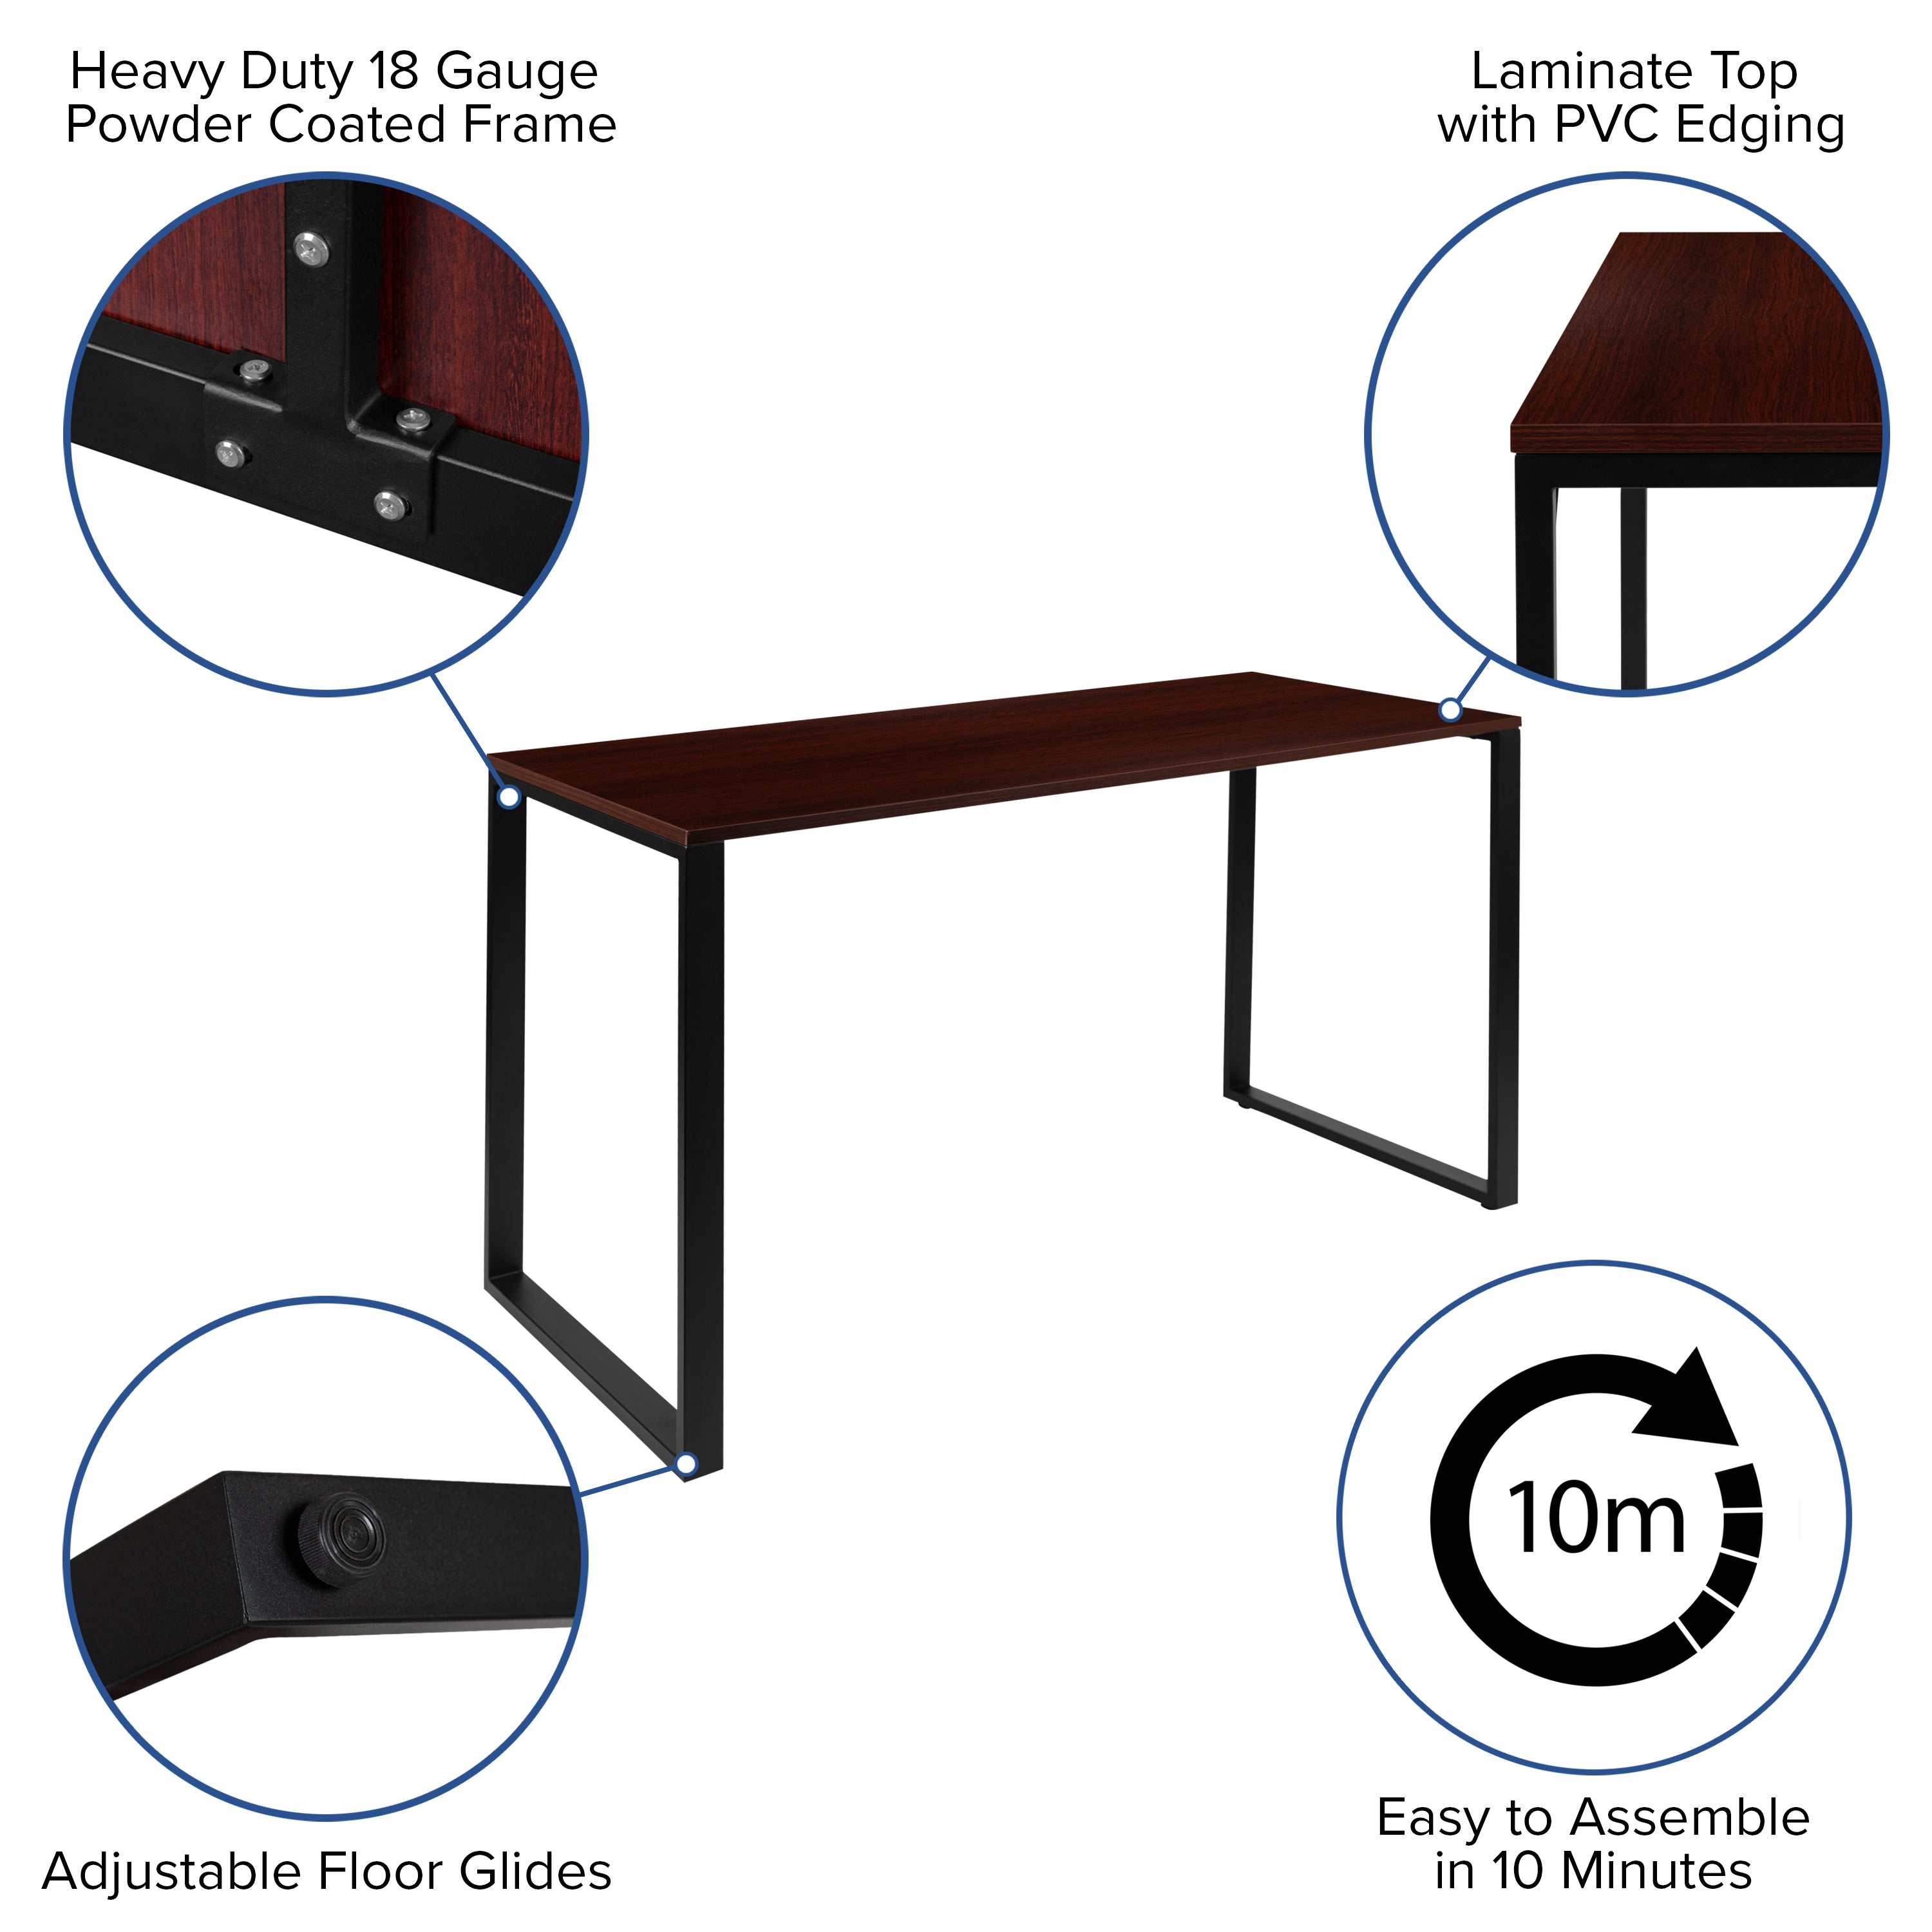 Modern Commercial Grade Desk Industrial Style Computer Desk Sturdy Home Office Desk - 55" Length-Desk-Flash Furniture-Wall2Wall Furnishings